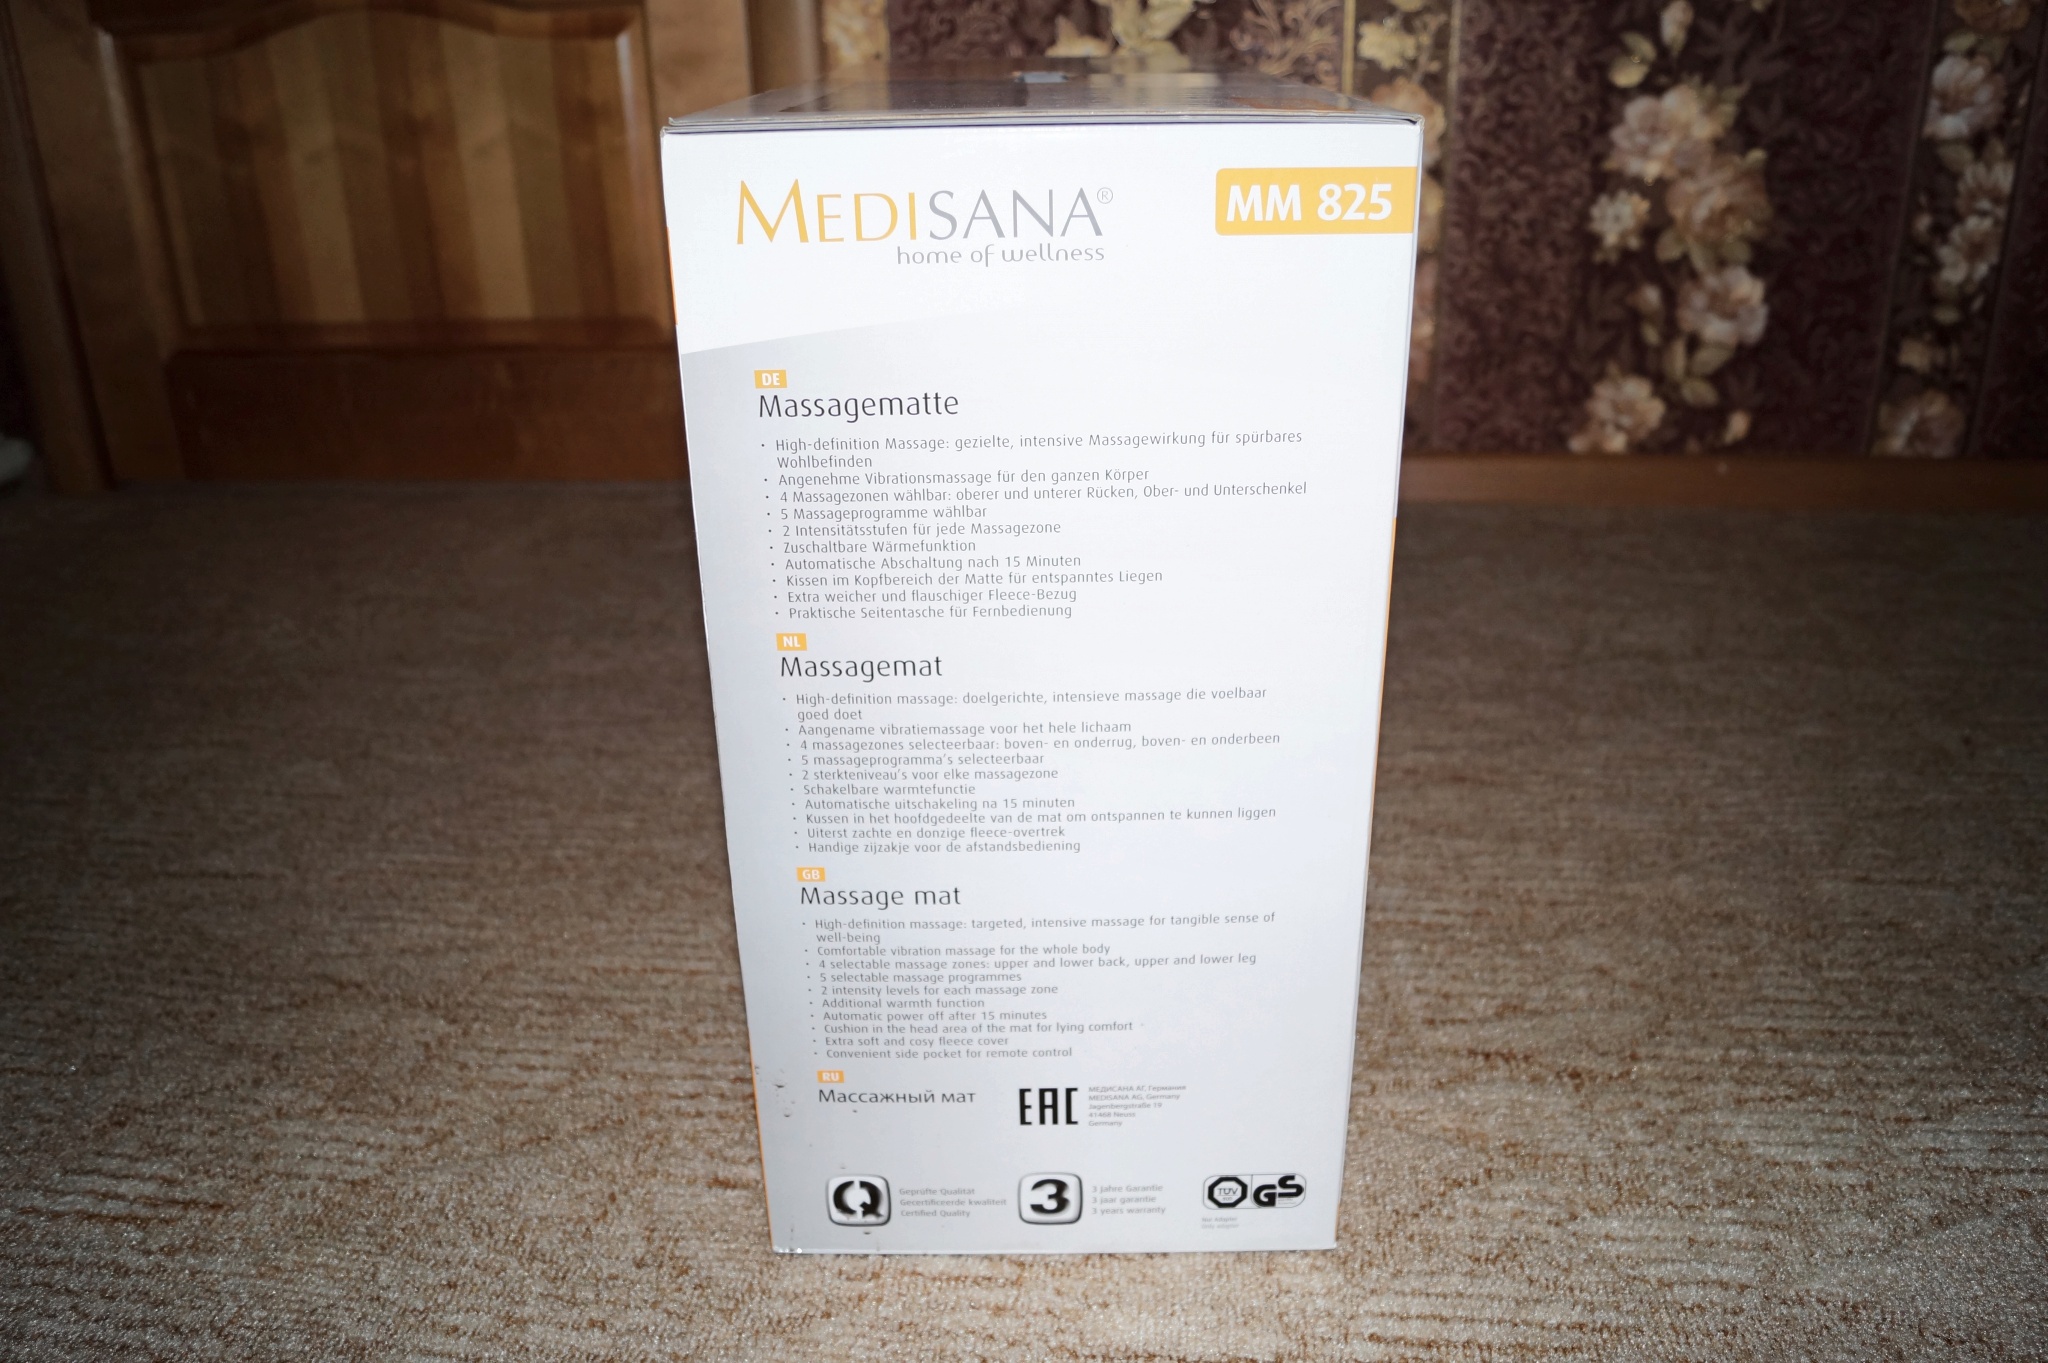 Medisana massage mat MM825 with Head function